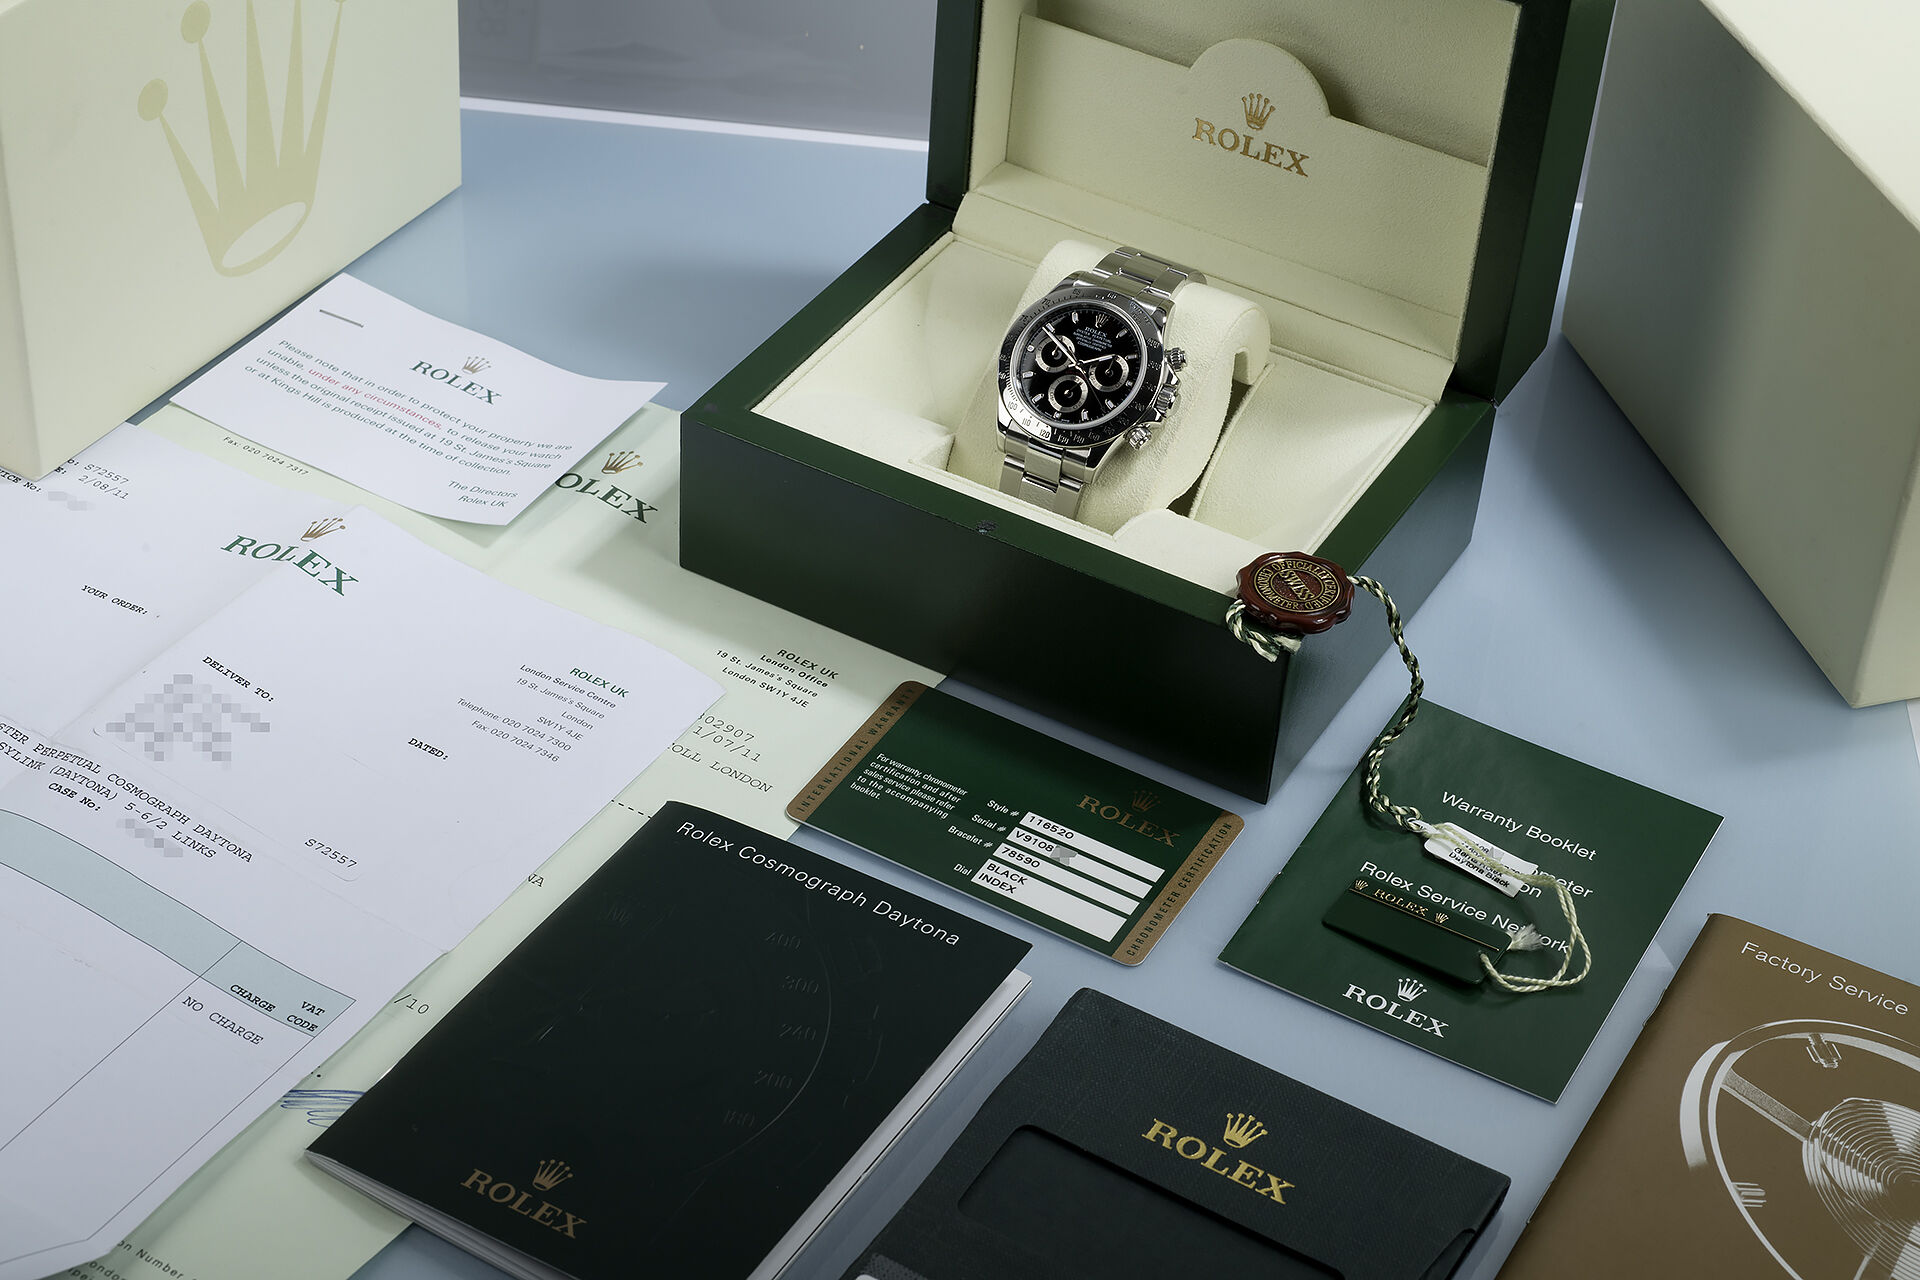 ref 116520 | 'Box & Certificate' | Rolex Cosmograph Daytona